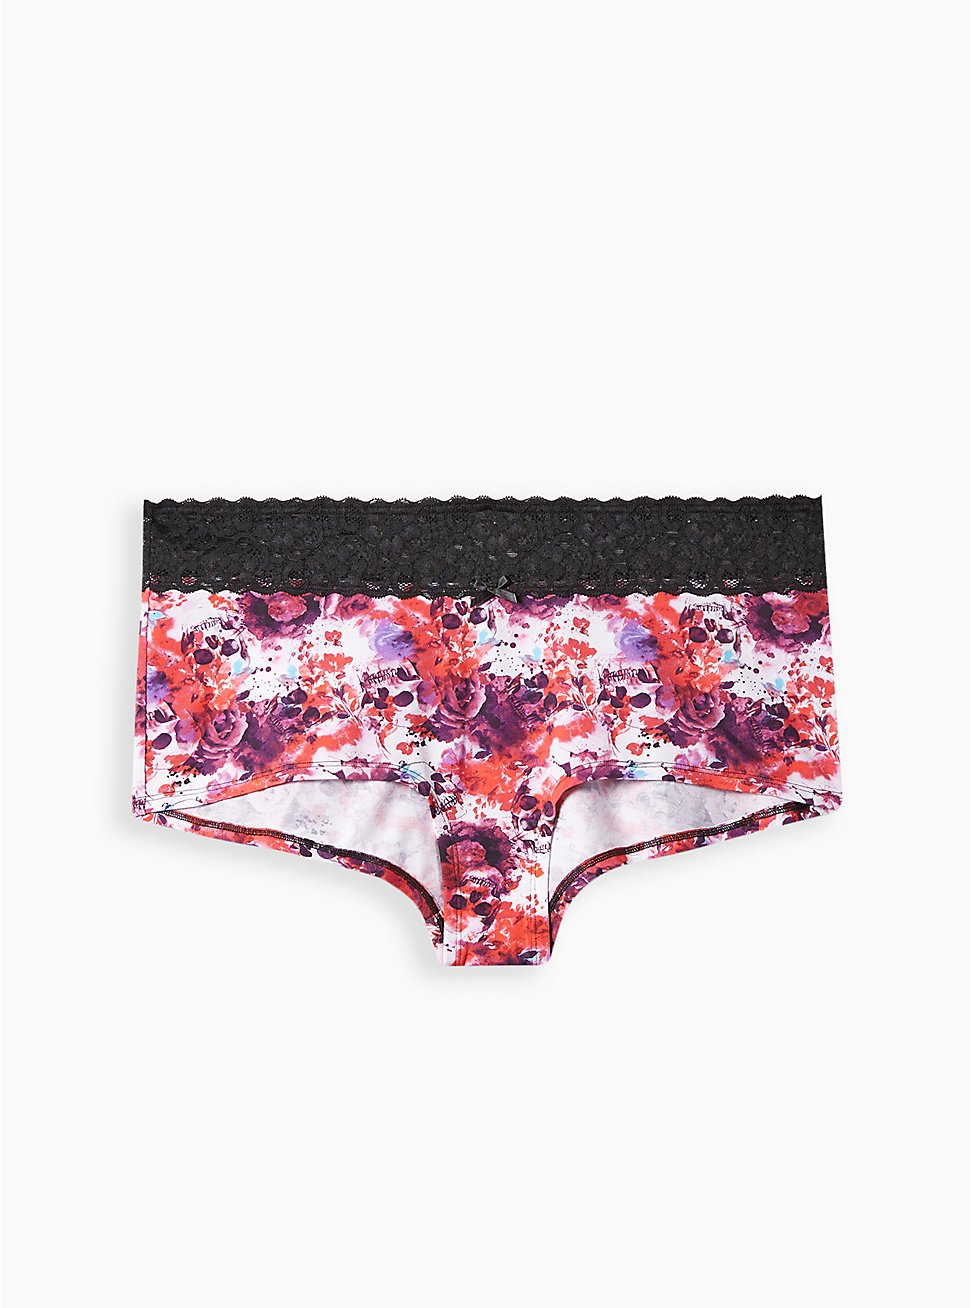 Plus Size Wide Lace Trim Boyshort Panty - Cotton Watercolor Floral Pink, WATER COLOR SKULL, hi-res